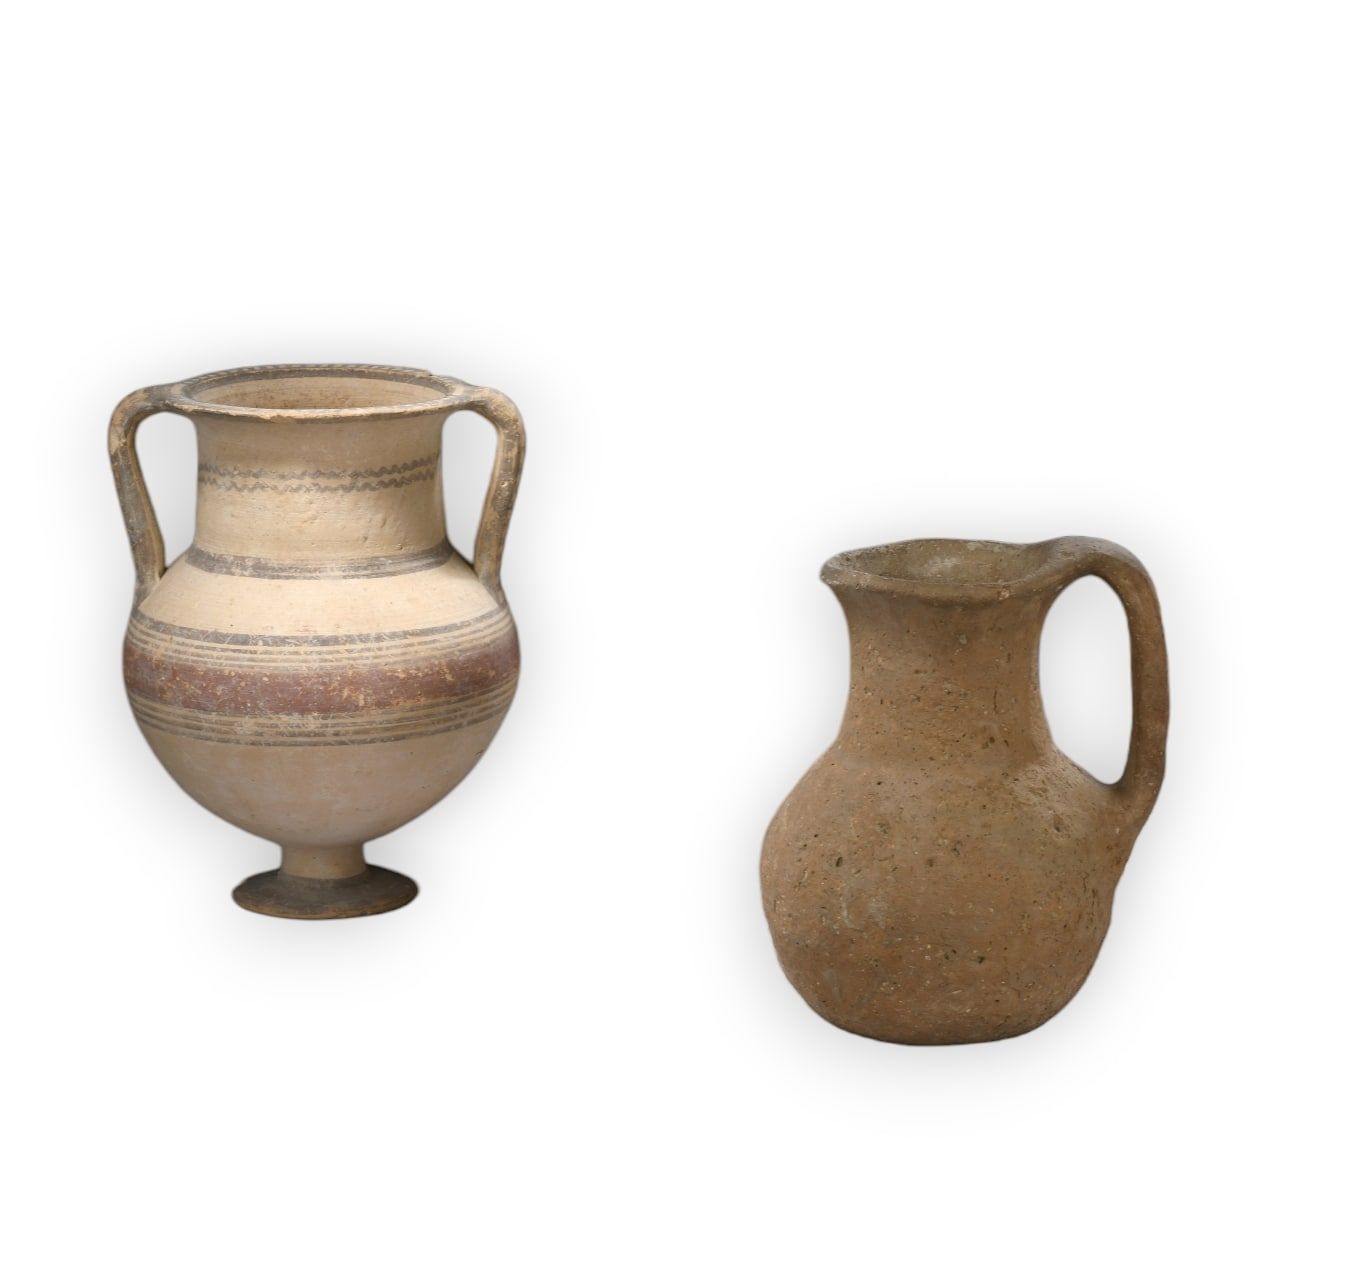 Null 拍品包括一个架在基座上的双柄壶。壶身和颈部绘有黑色和红色的条纹和线条。
粉红色的陶土。唇部和底部有小缺口。有轻微的磨损。
塞浦路斯，公元前7世纪
H.&hellip;